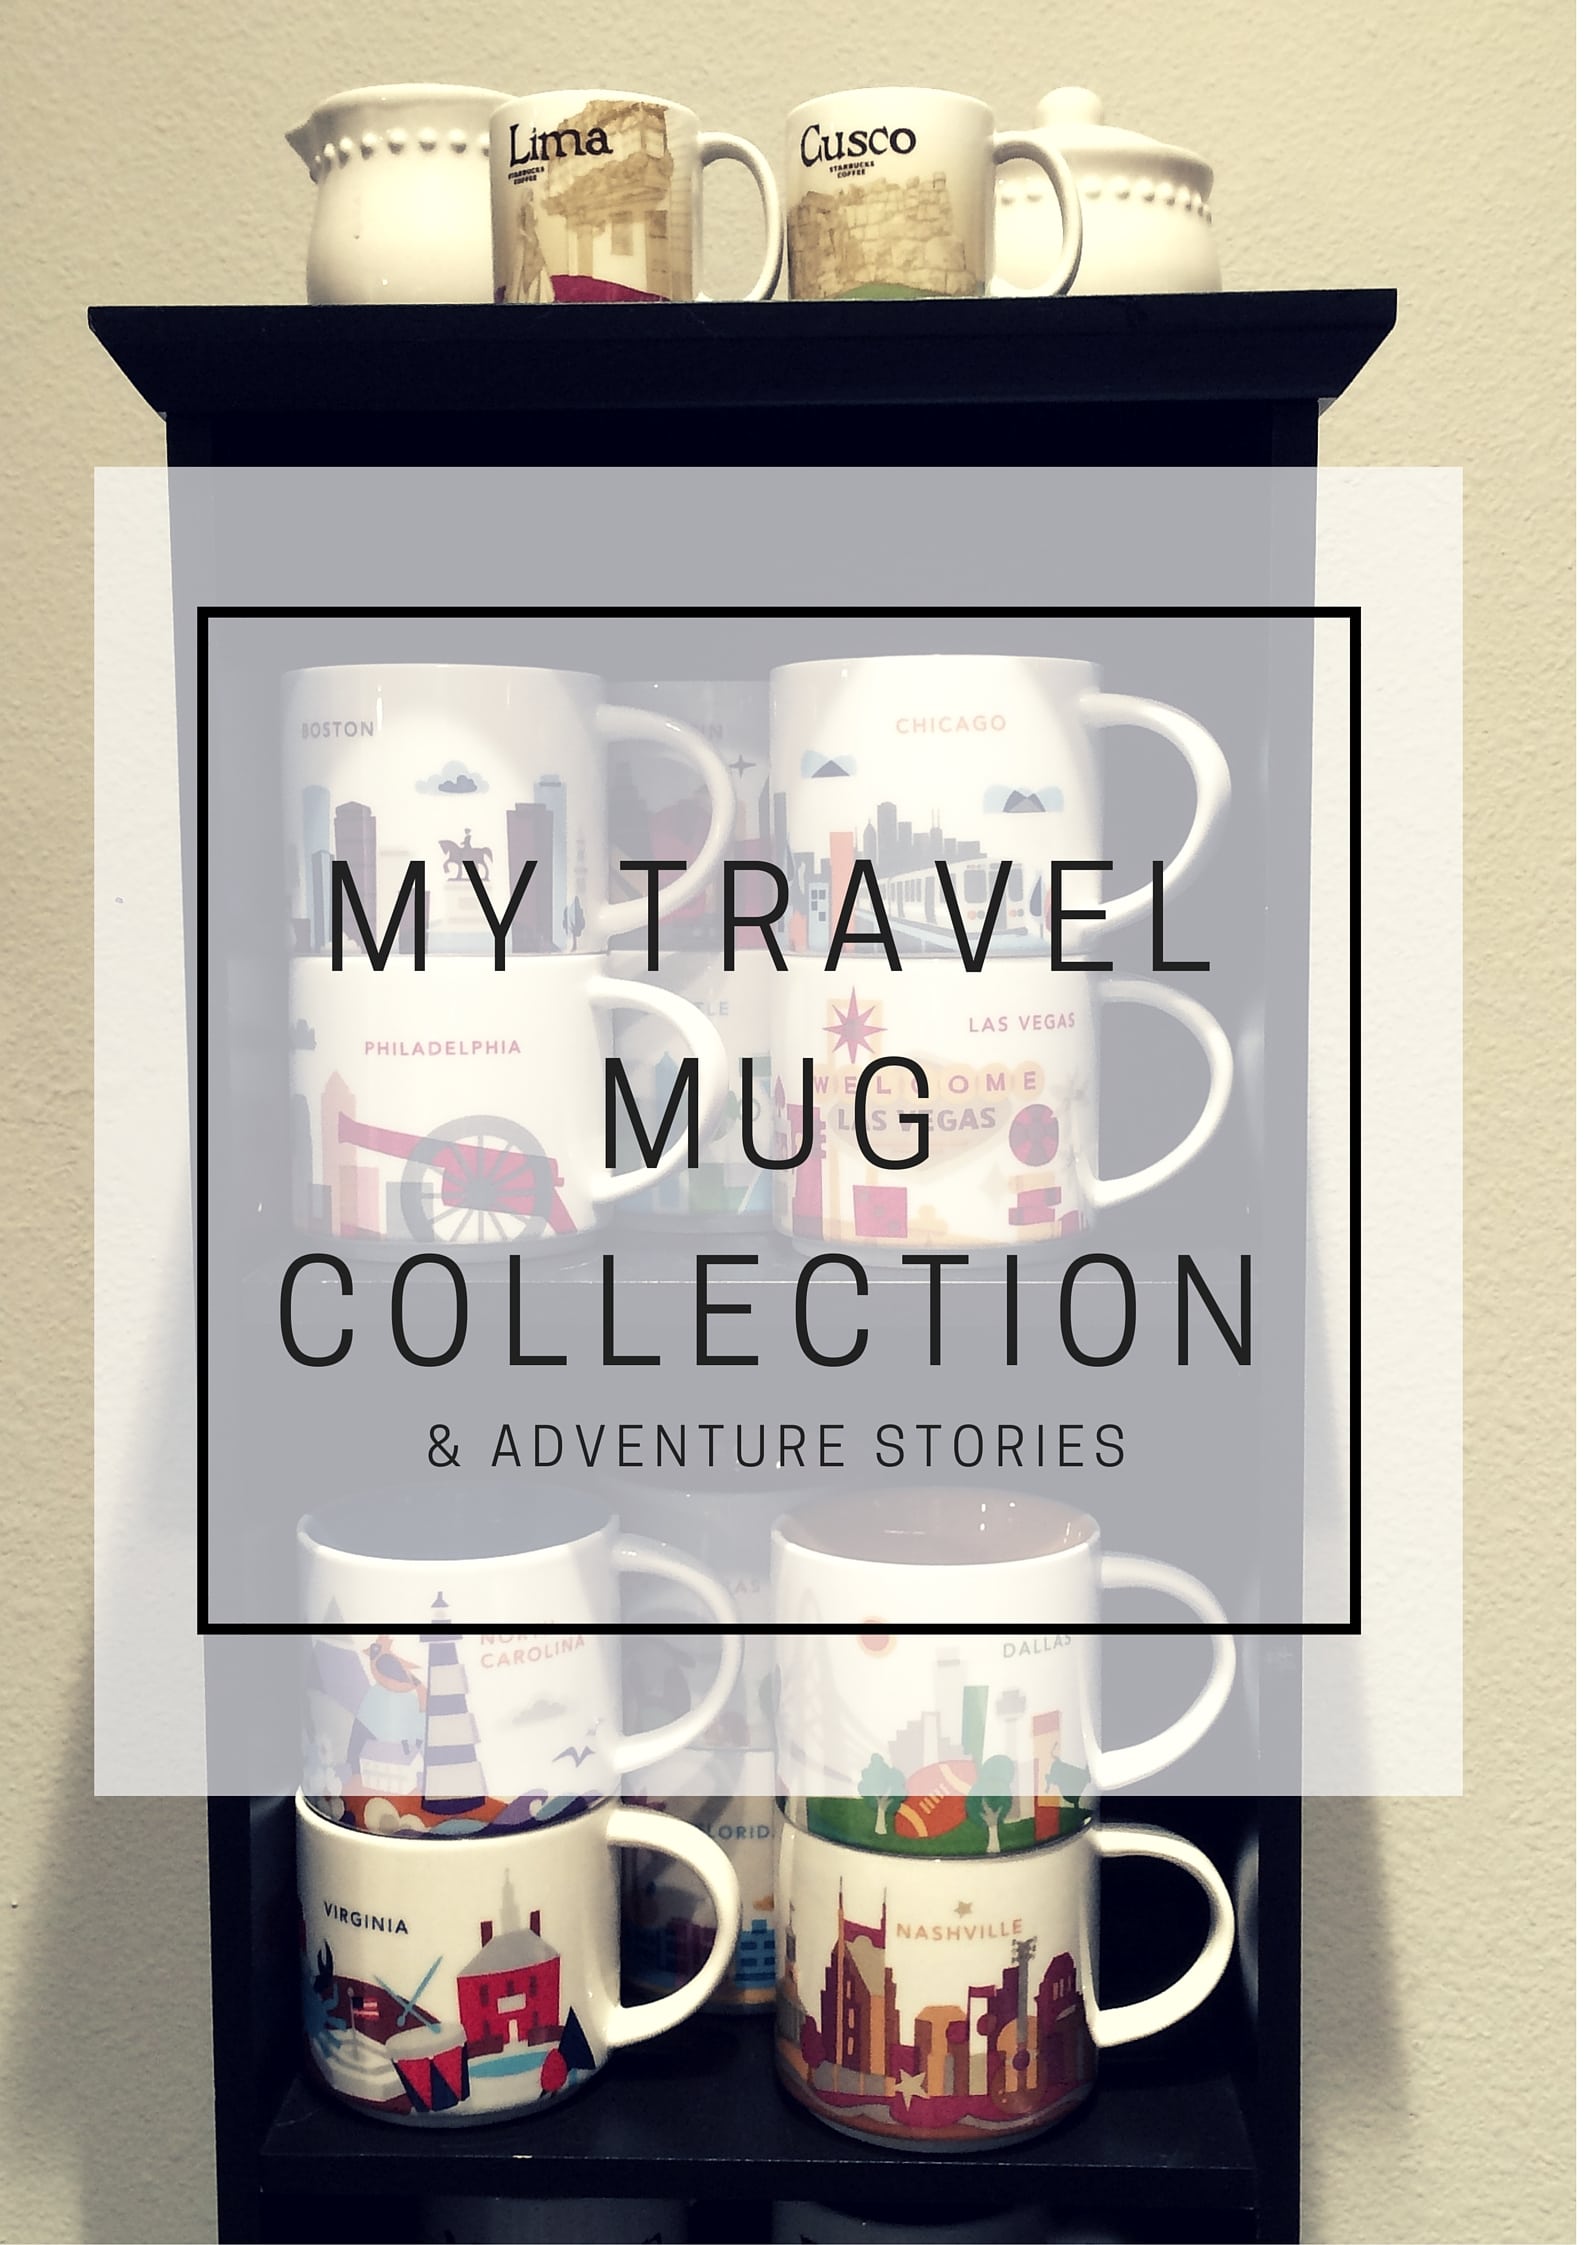 https://www.everydayaccountsblog.com/wp-content/uploads/2016/04/My-Travel-Mug-Collection.jpg